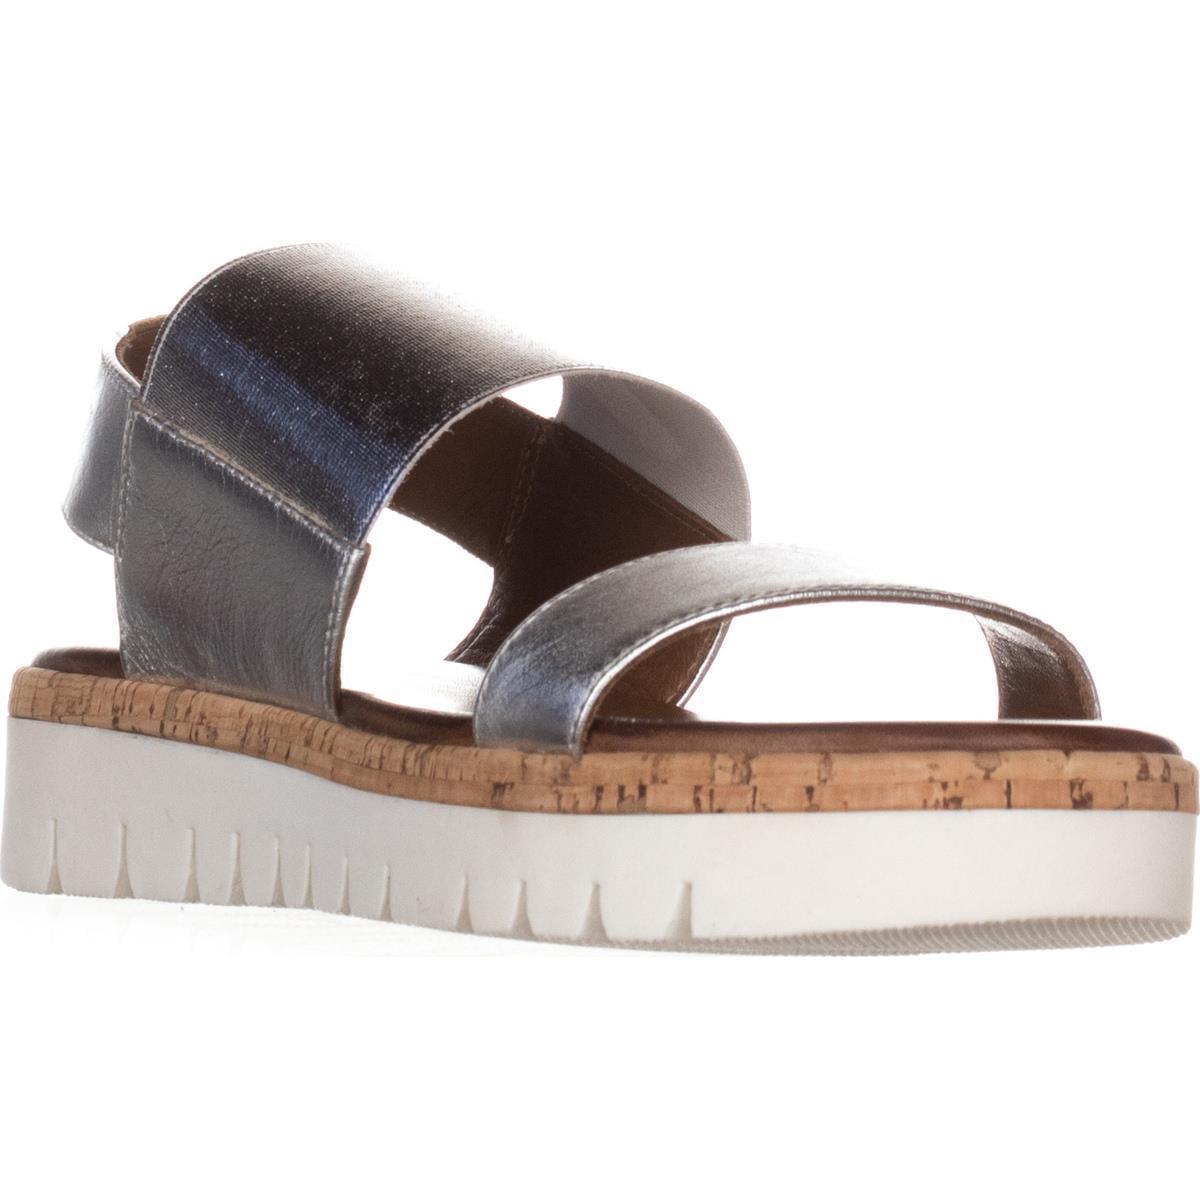 ALDO - Womens Aldo Toni Flat Platform Sandals, Silver - Walmart.com ...